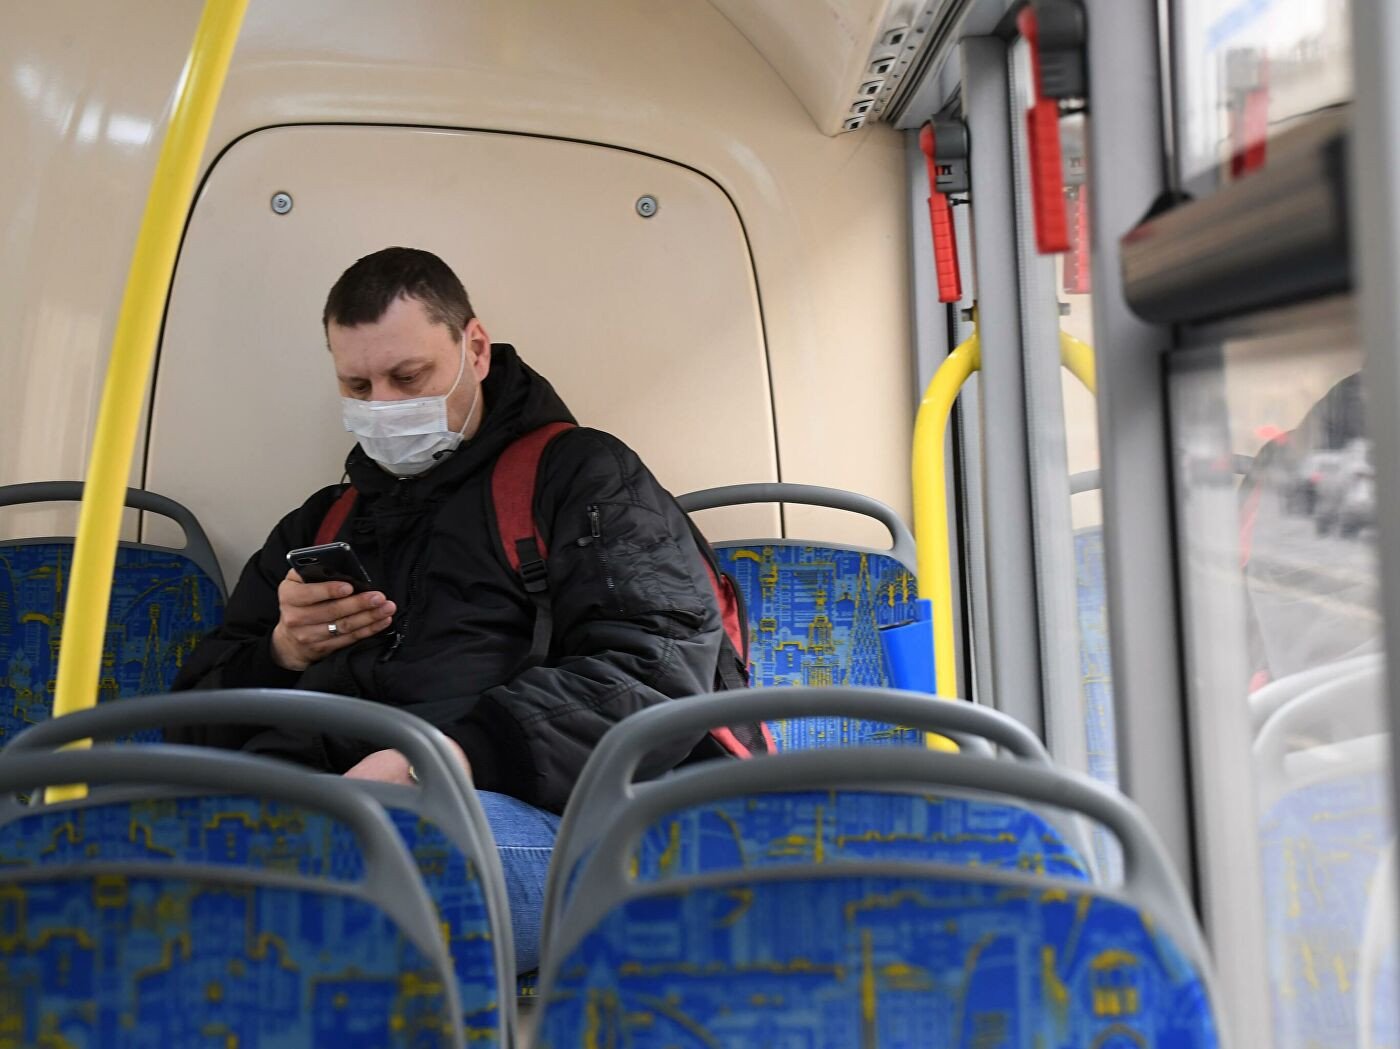 4 маски на лице и литр дезраствора — в Херсоне фанатик карантина шокировал пассажиров маршрутки